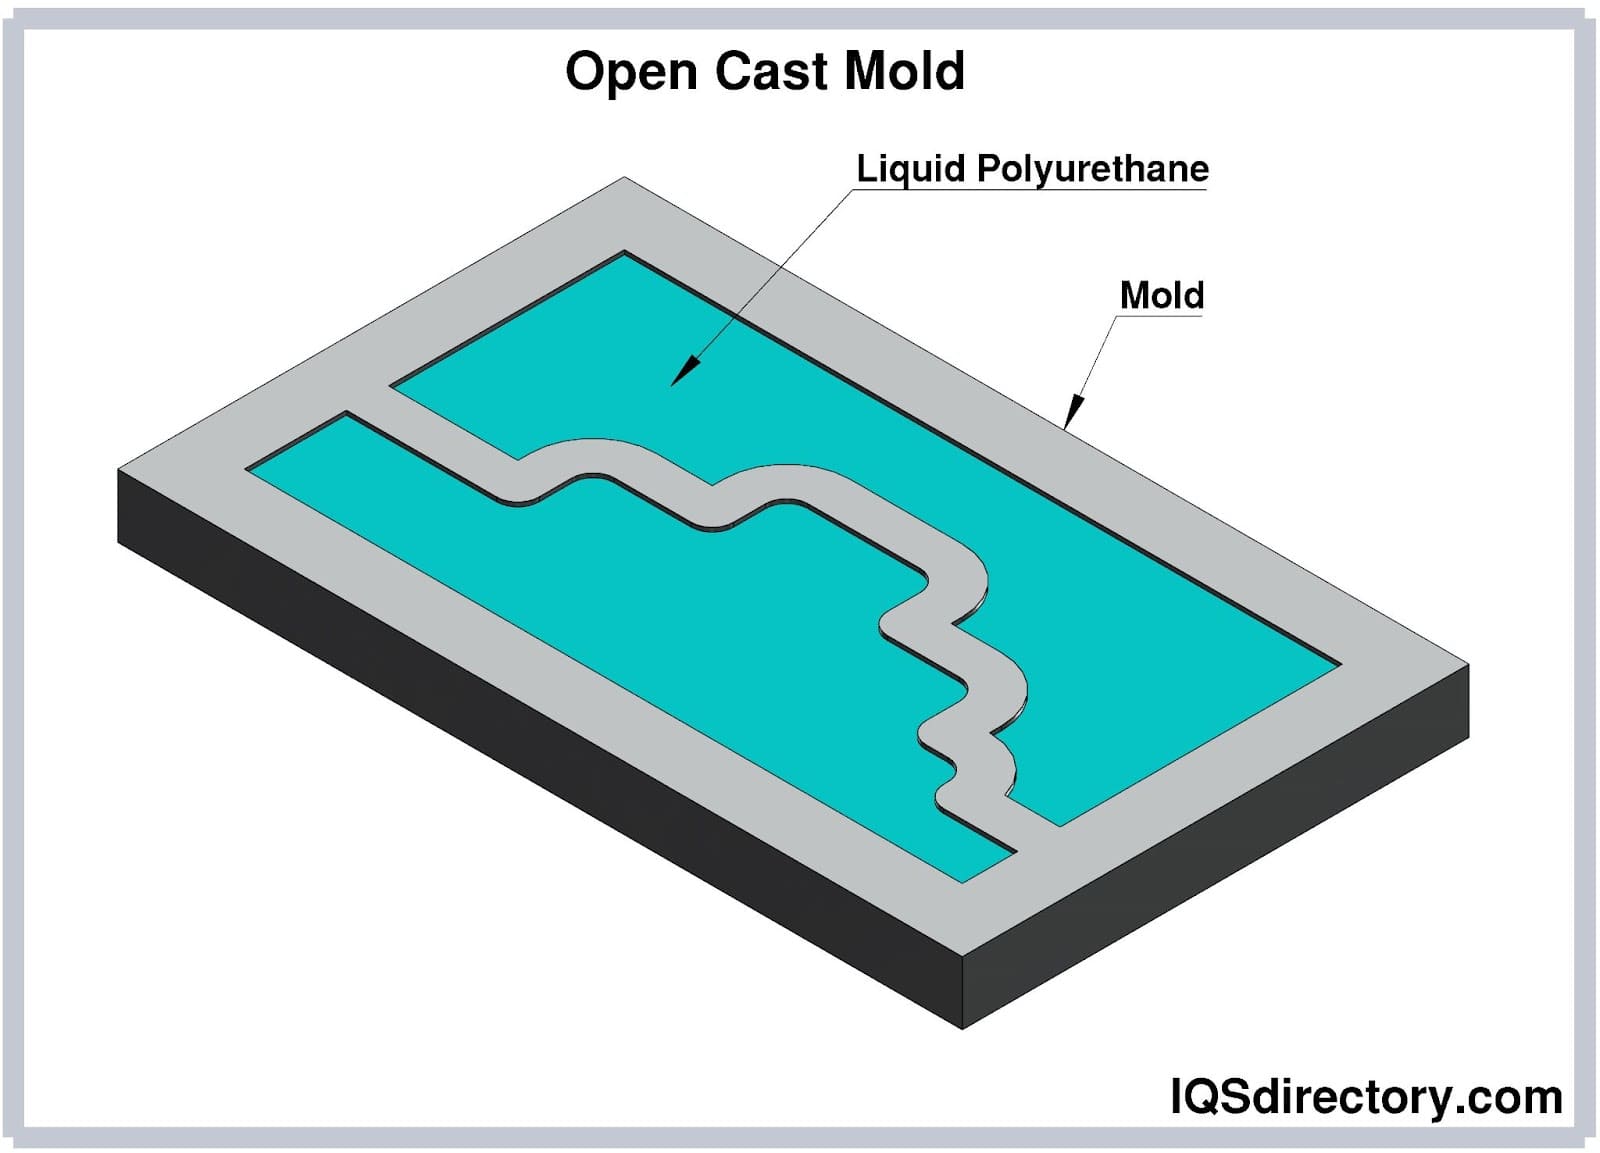 Open Cast Mold